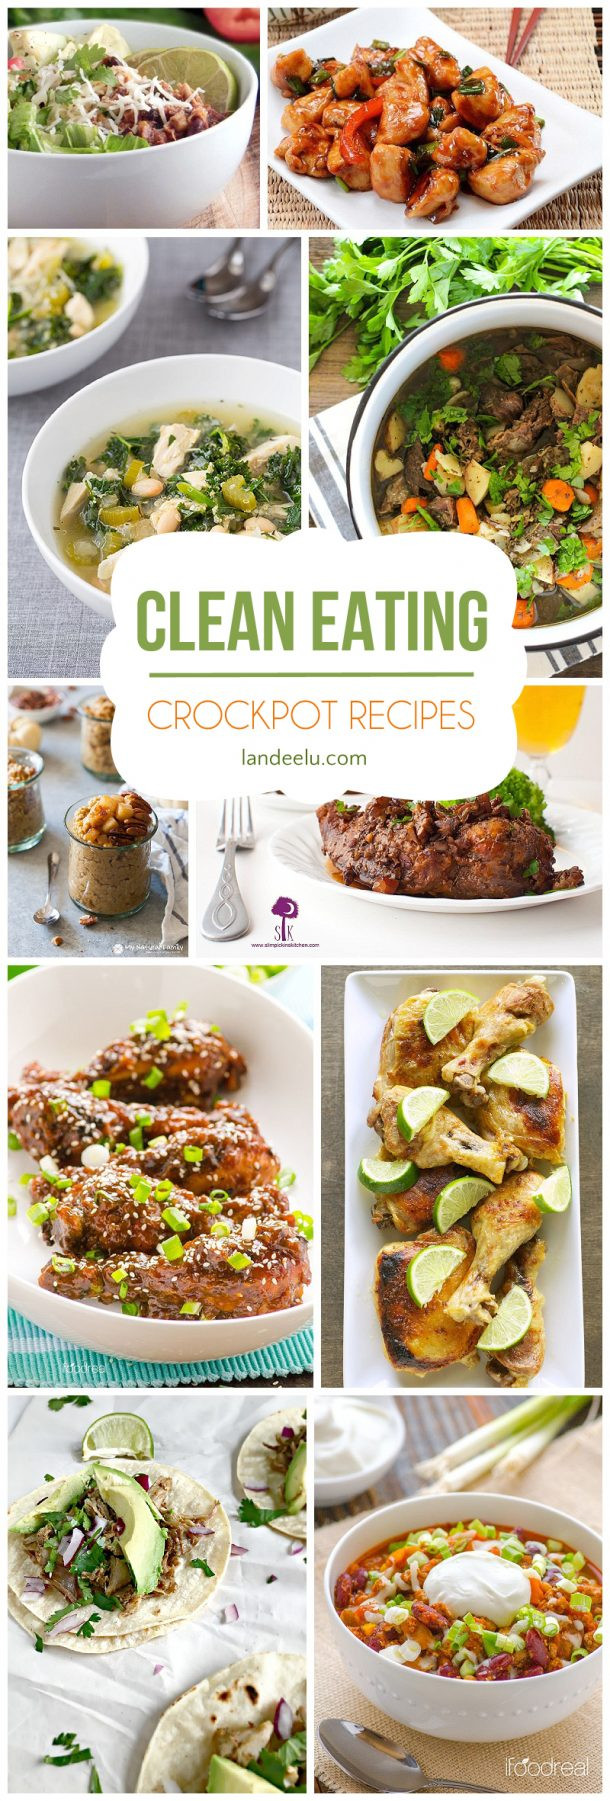 Clean Eating Crock Pot Recipes
 Delicious Clean Eating Crockpot Recipes Page 2 of 2